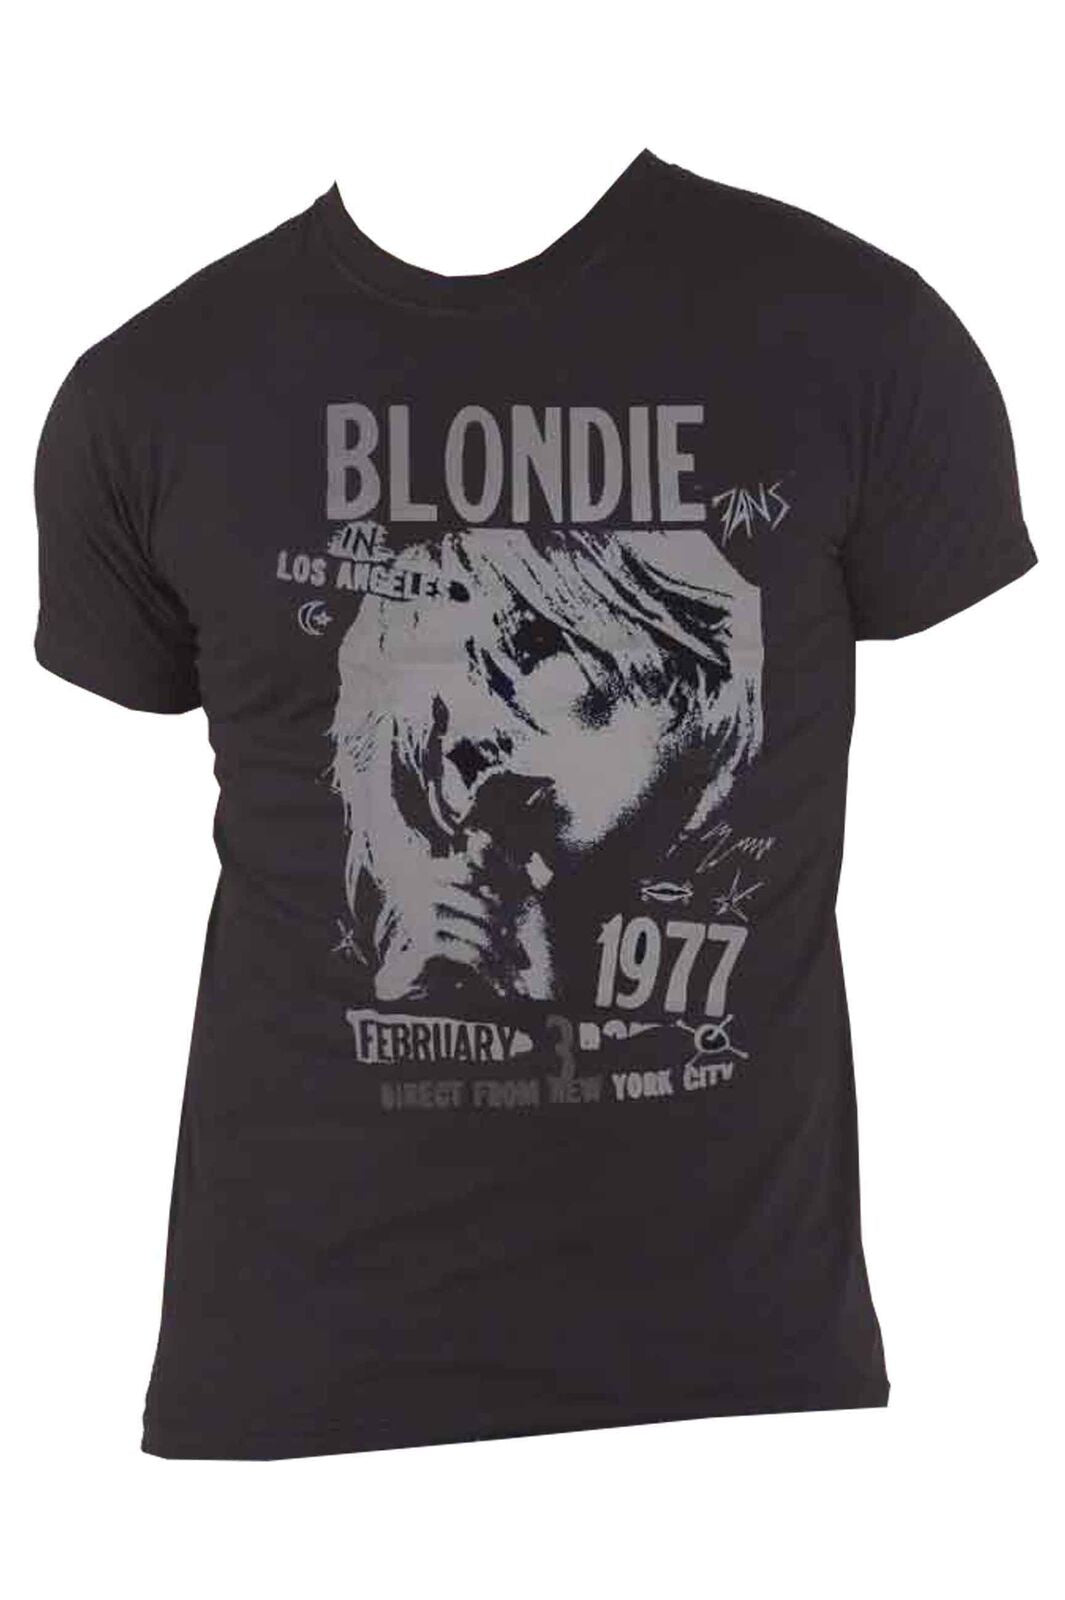 BLONDIE - Poster 1977 T-Shirt